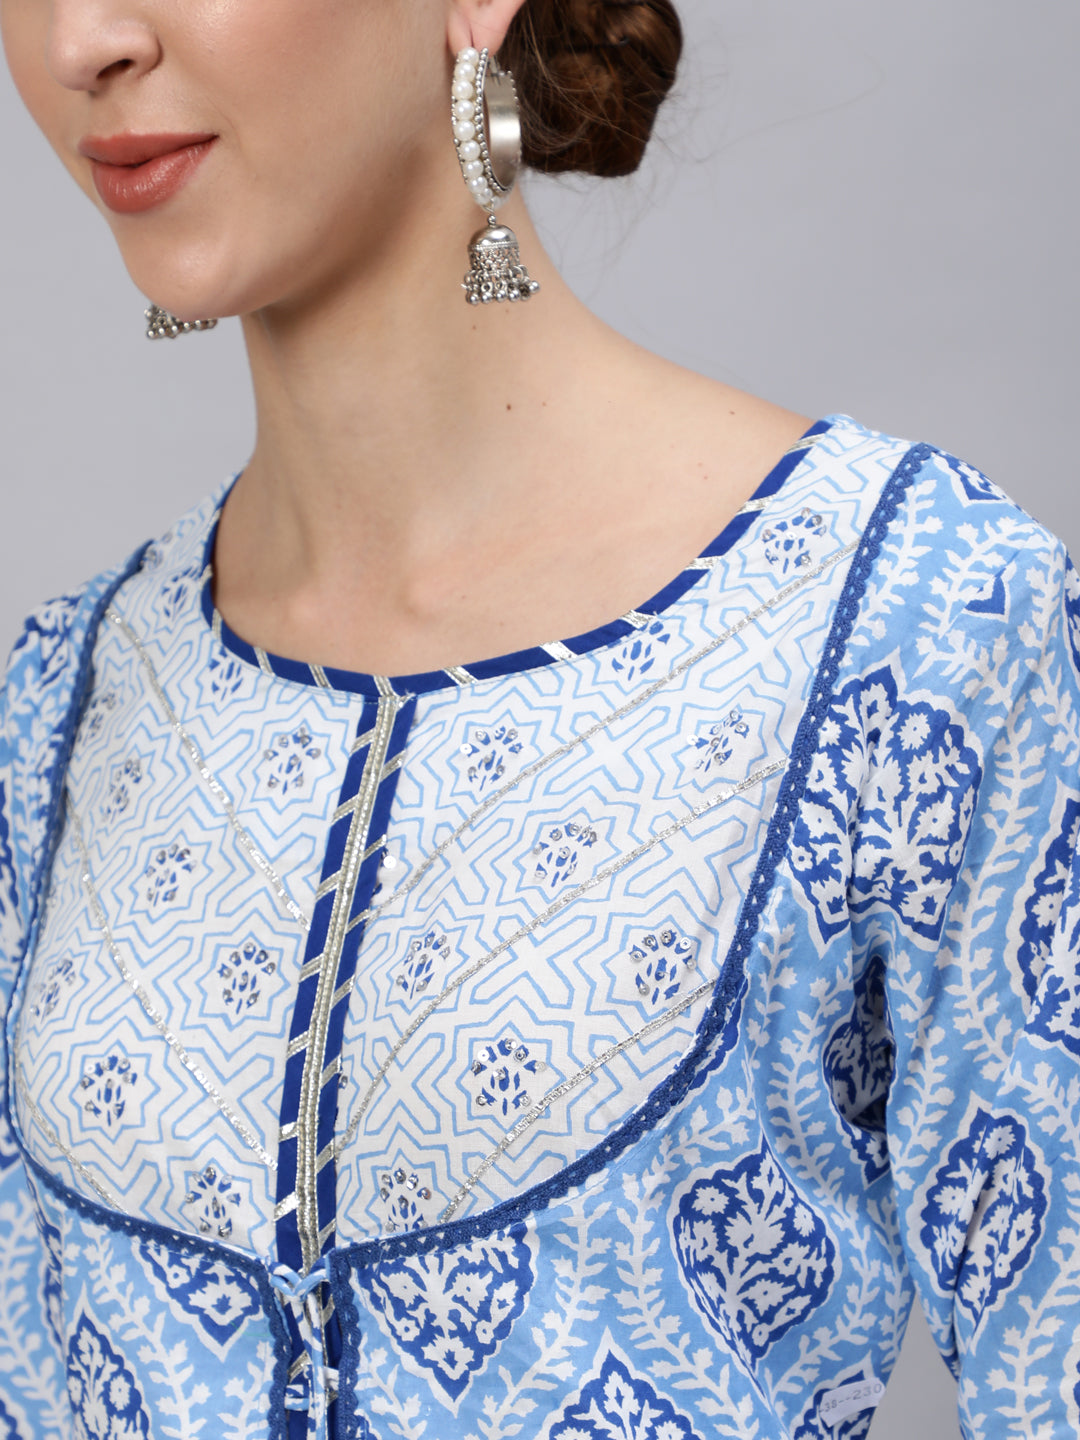 Ishin Women's Cotton Blue Gotta Patti Embroidered Anarkali Kurta Trouser Dupatta Set